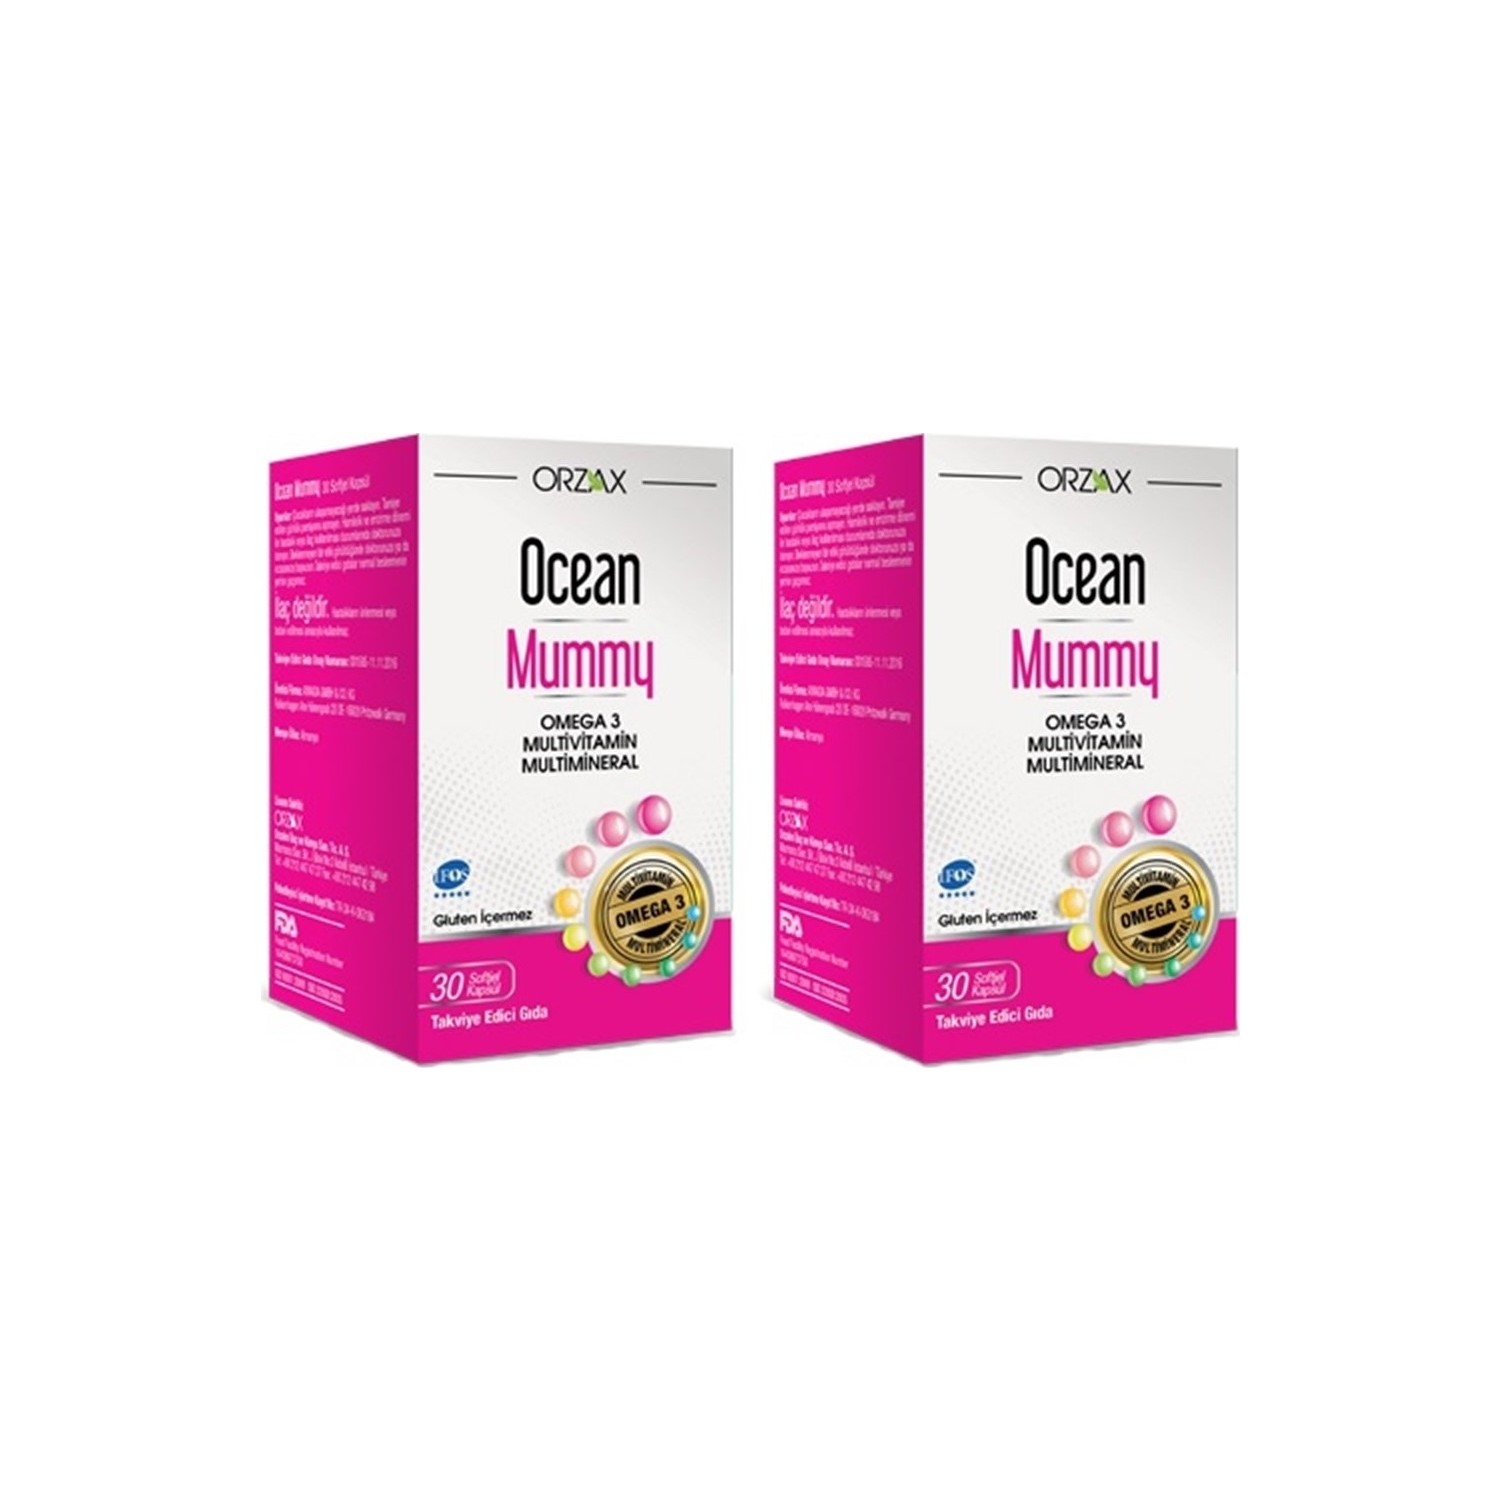 Мультивитамин Омега-3 Ocean Mummy, 2 упаковки по 30 капсул healthlabs пробиотик ibs пищевая добавка 30 капсул